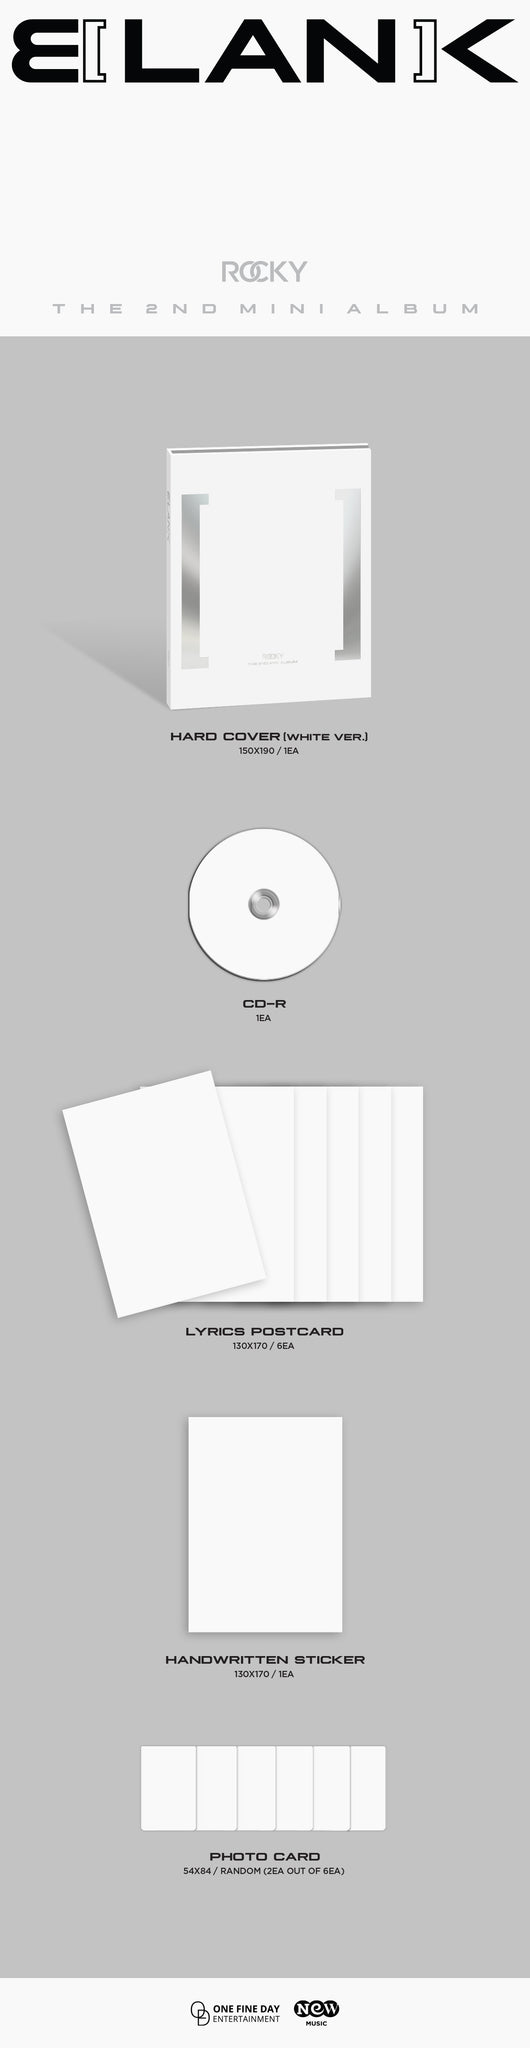 Rocky 2nd Mini Album BLANK - WHITE Version Inclusions: Hard Cover & Photobook, CD, Lyrics Postcard Set, Handwritten Stickers, Photocards